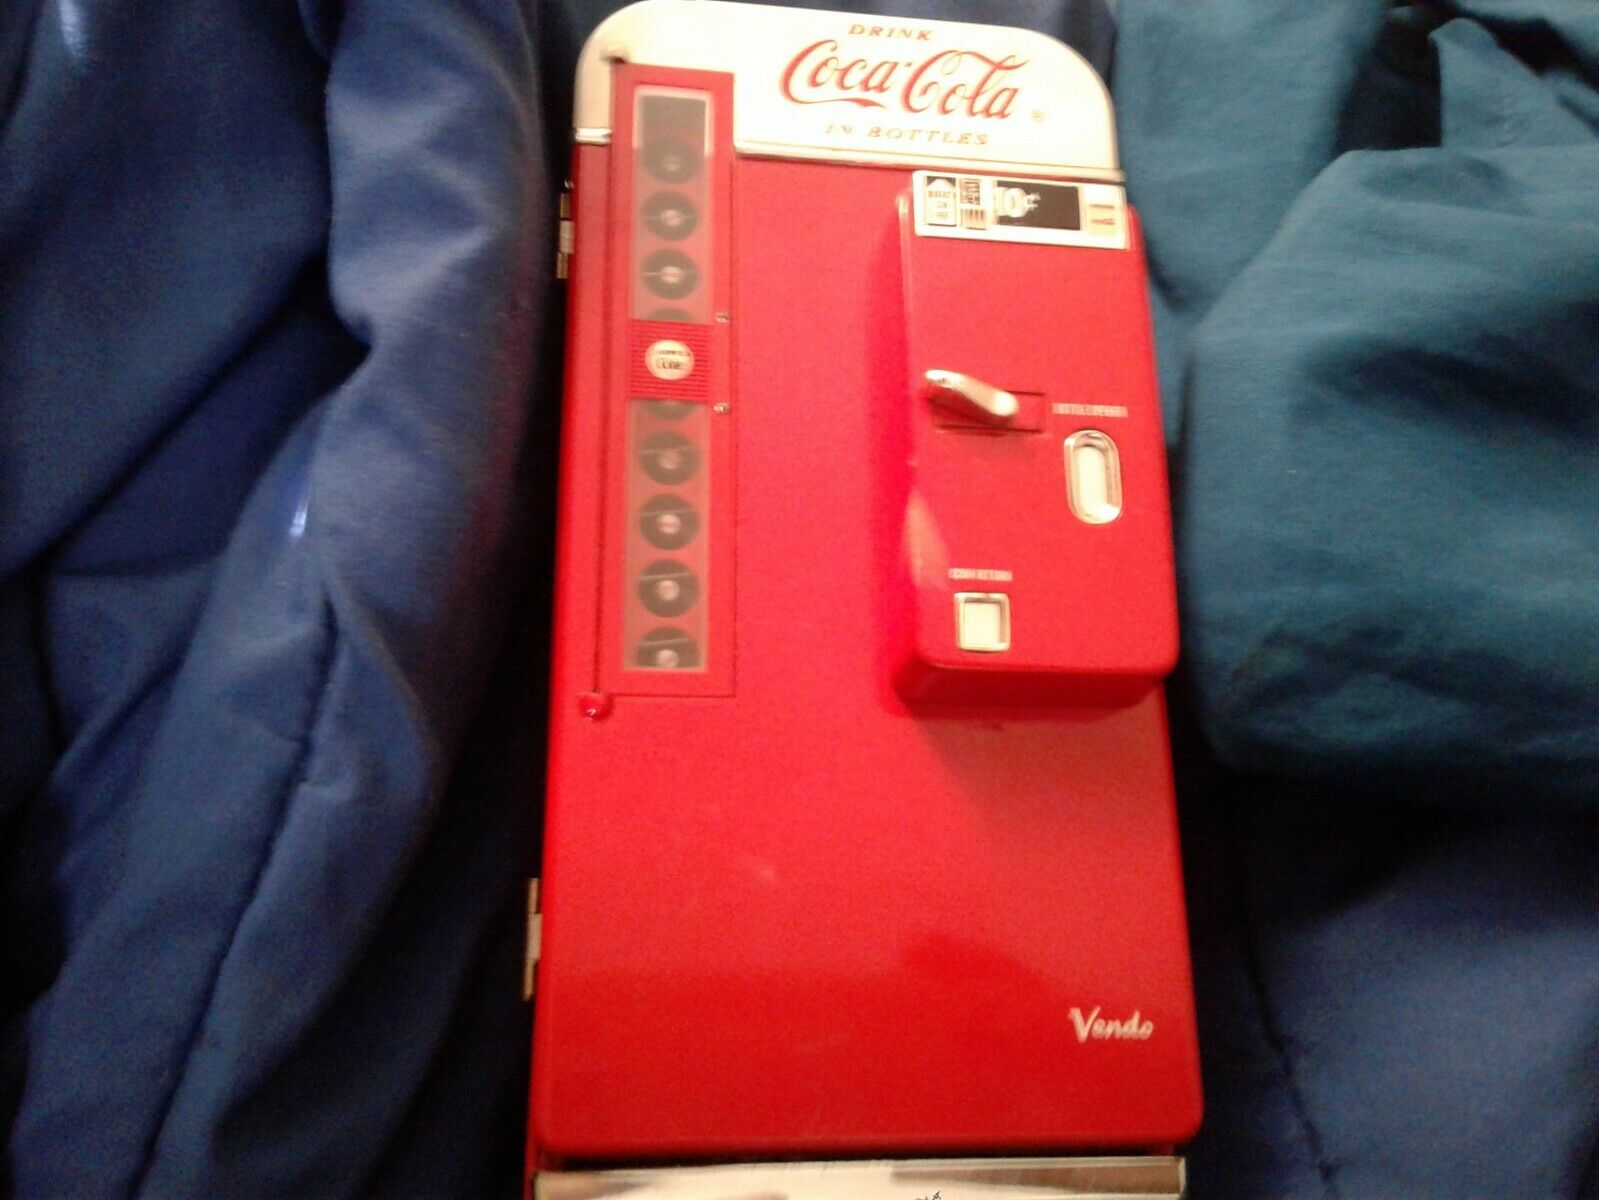 Vendo - Coca-cola Vending Machine Musical Bank Ck 31619 - Works Plays Music !